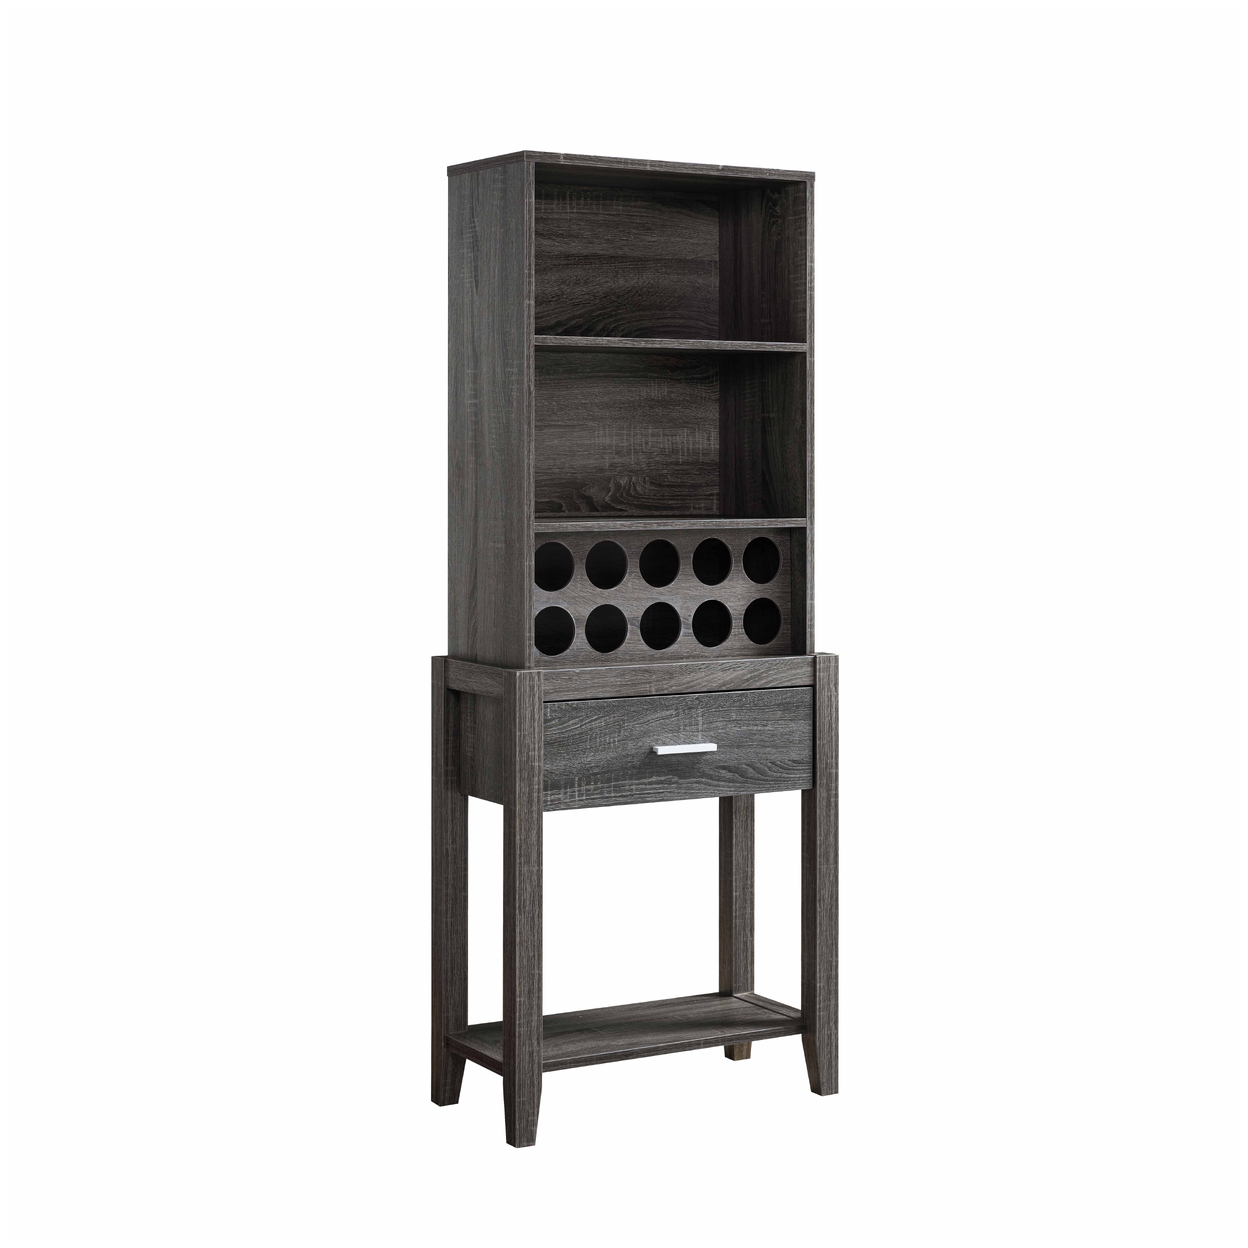 66 Inch Wine Cabinet With 3 Shelves, Bottle Rack, Distressed Gray Finish- Saltoro Sherpi